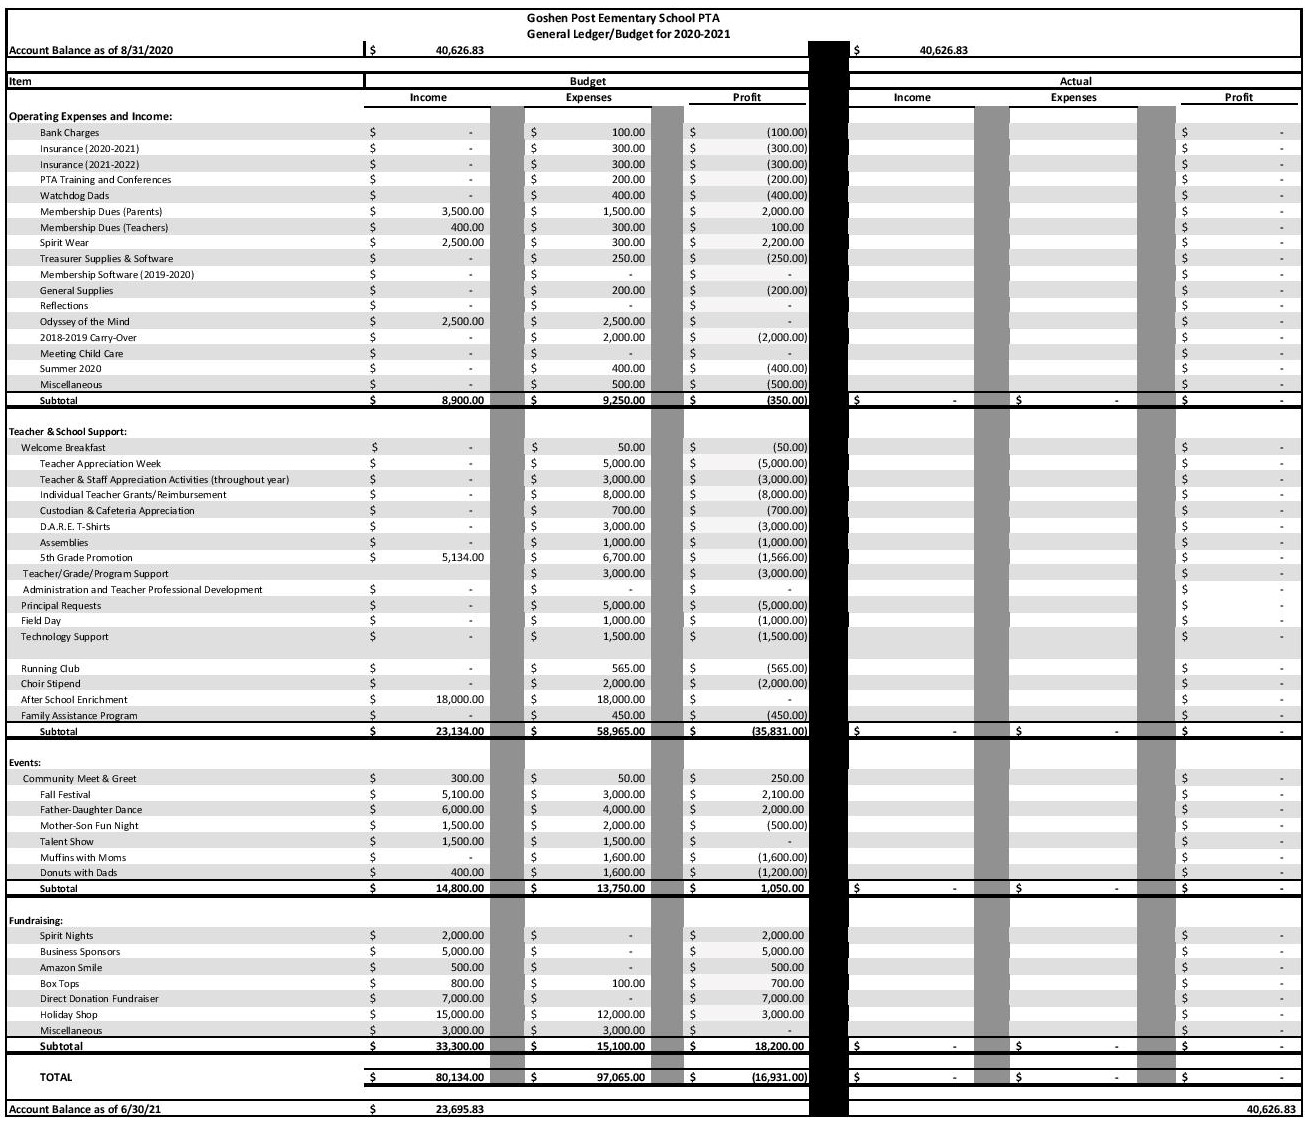 Budget/Reimbursement Forms - GOSHEN POST ELEMENTARY PTA